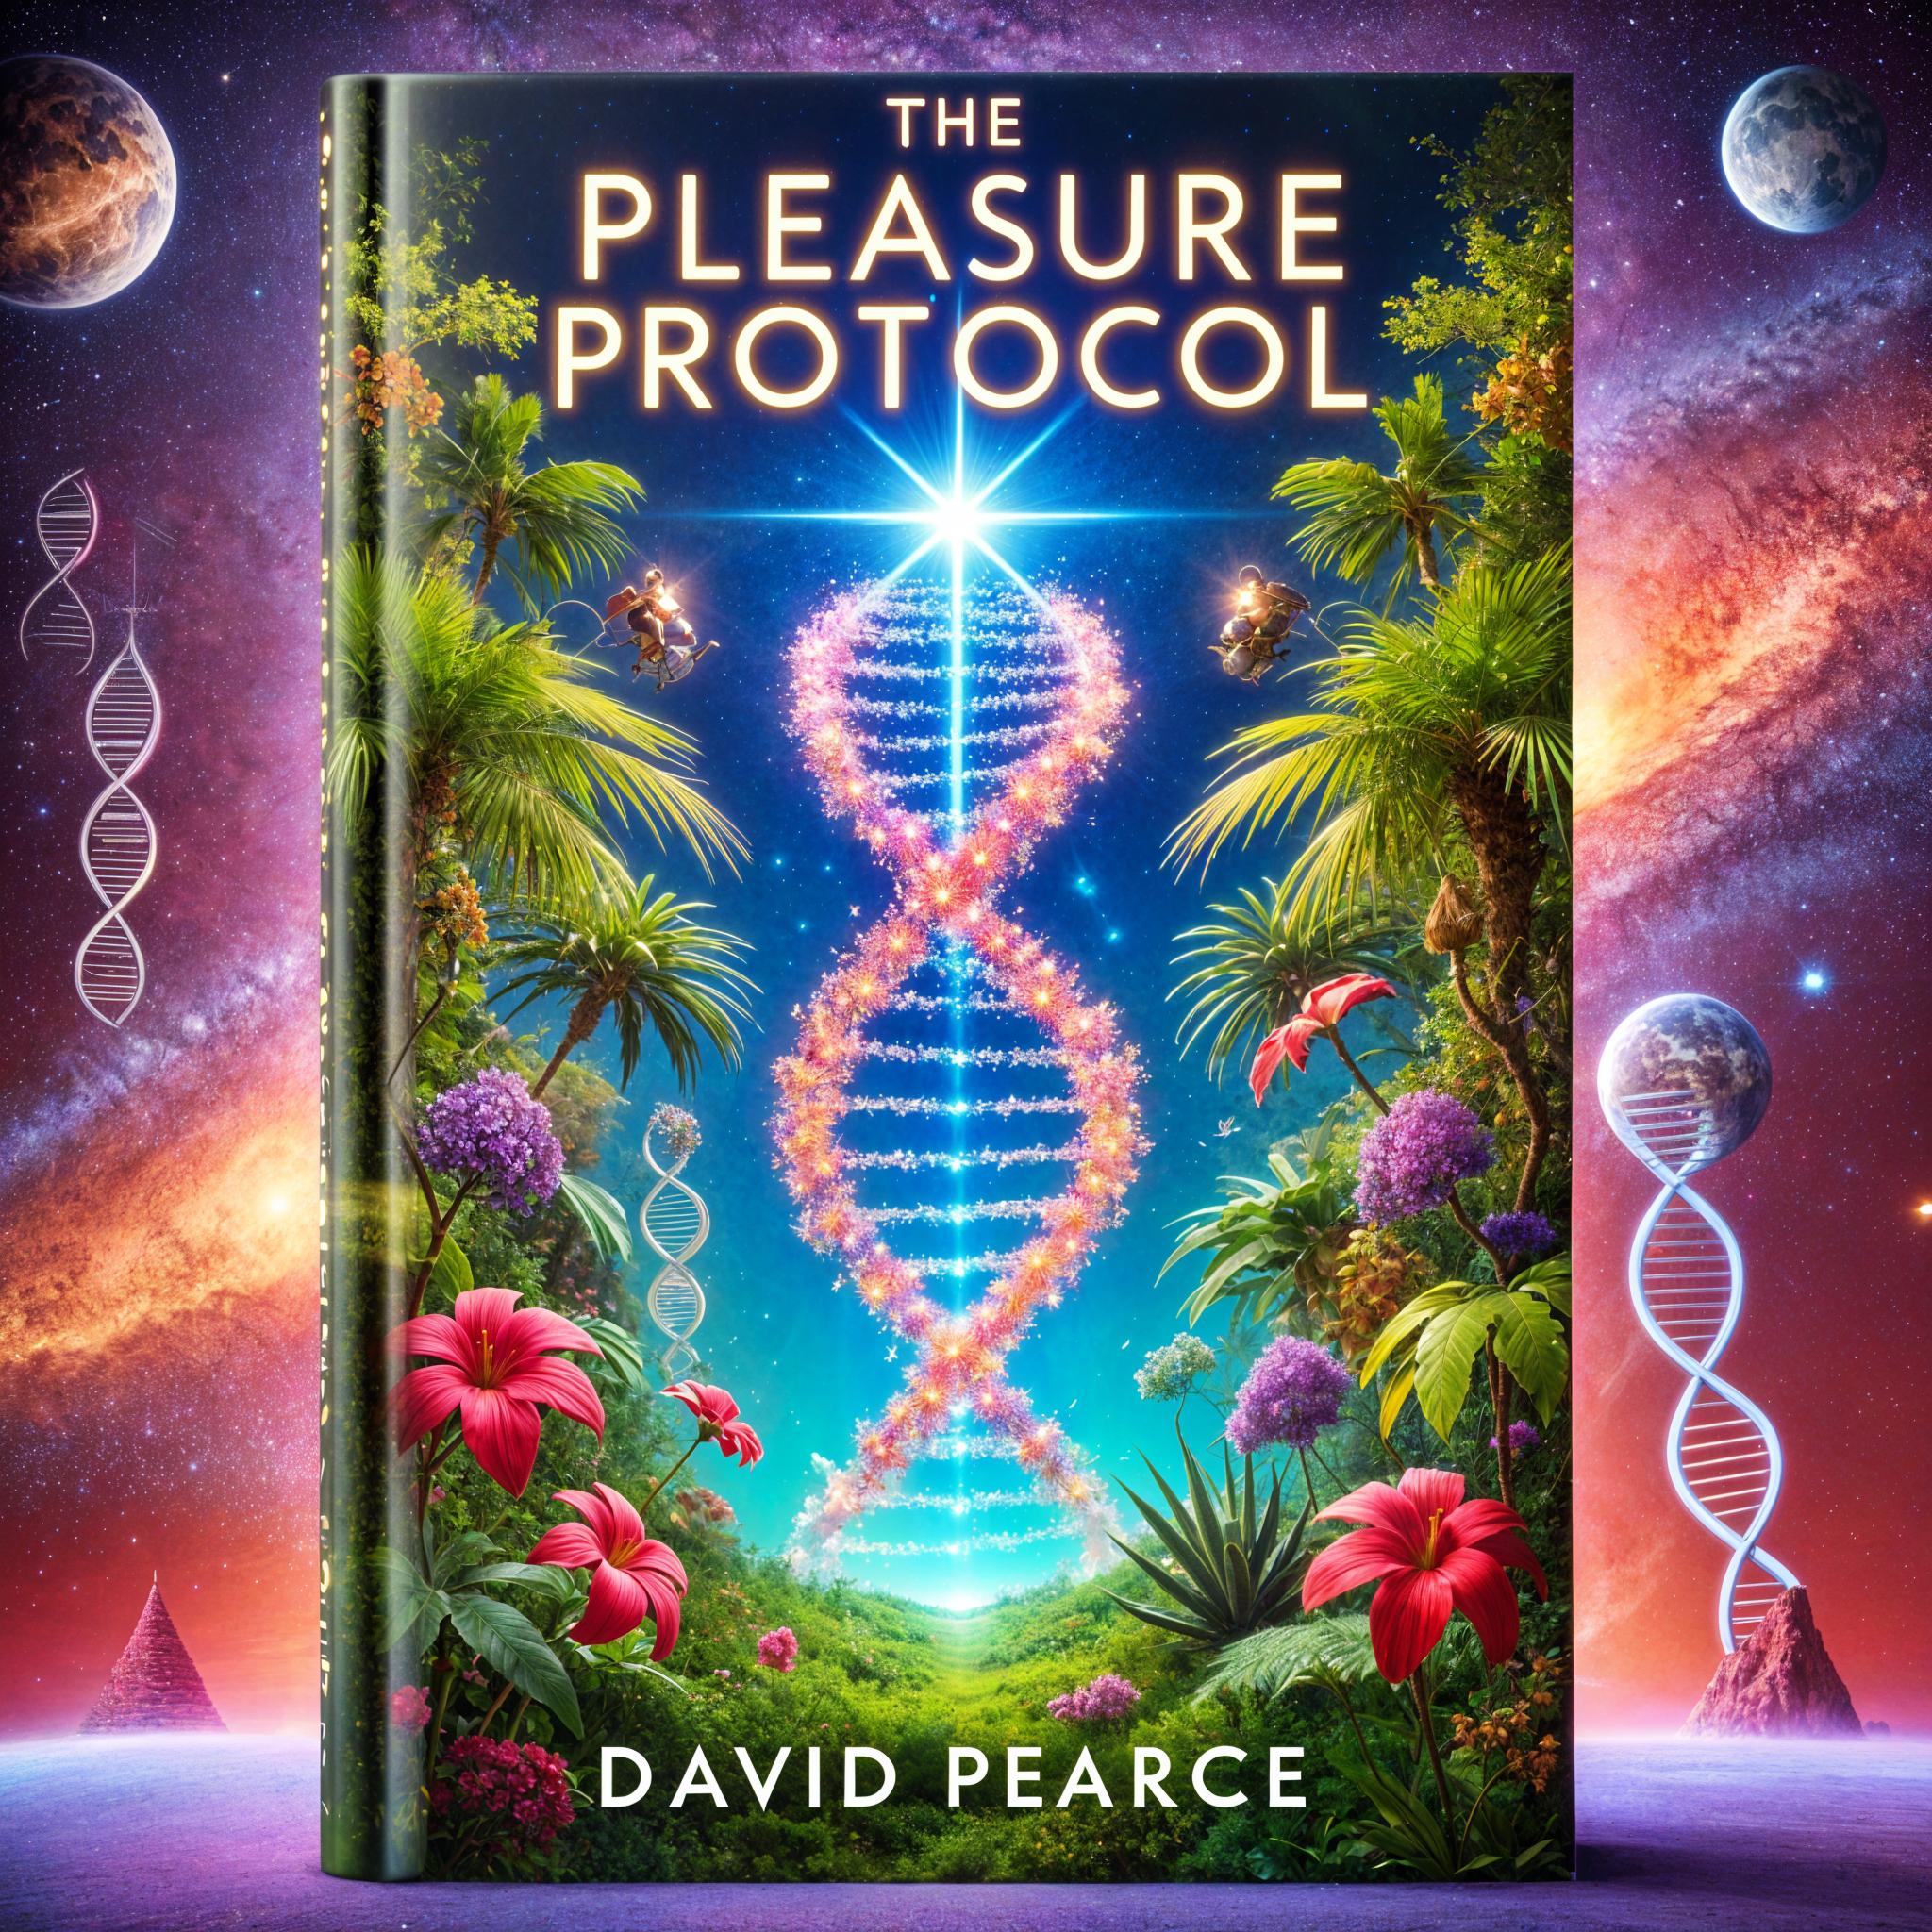 The Pleasure Protocol by David Pearce